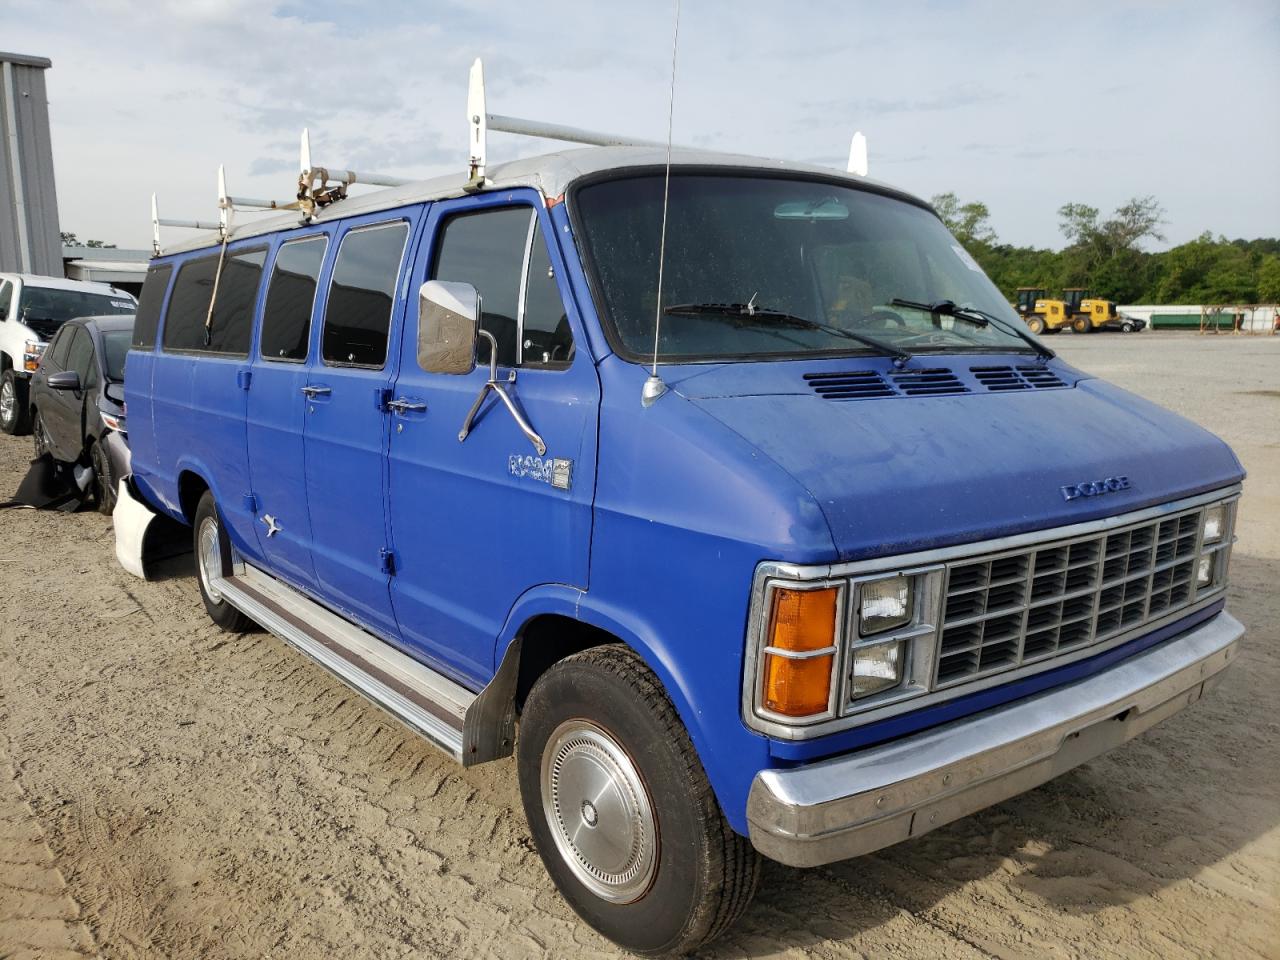 1985 Dodge RAM Wagon for sale at Copart Jacksonville, FL Lot #41780*** |  SalvageReseller.com